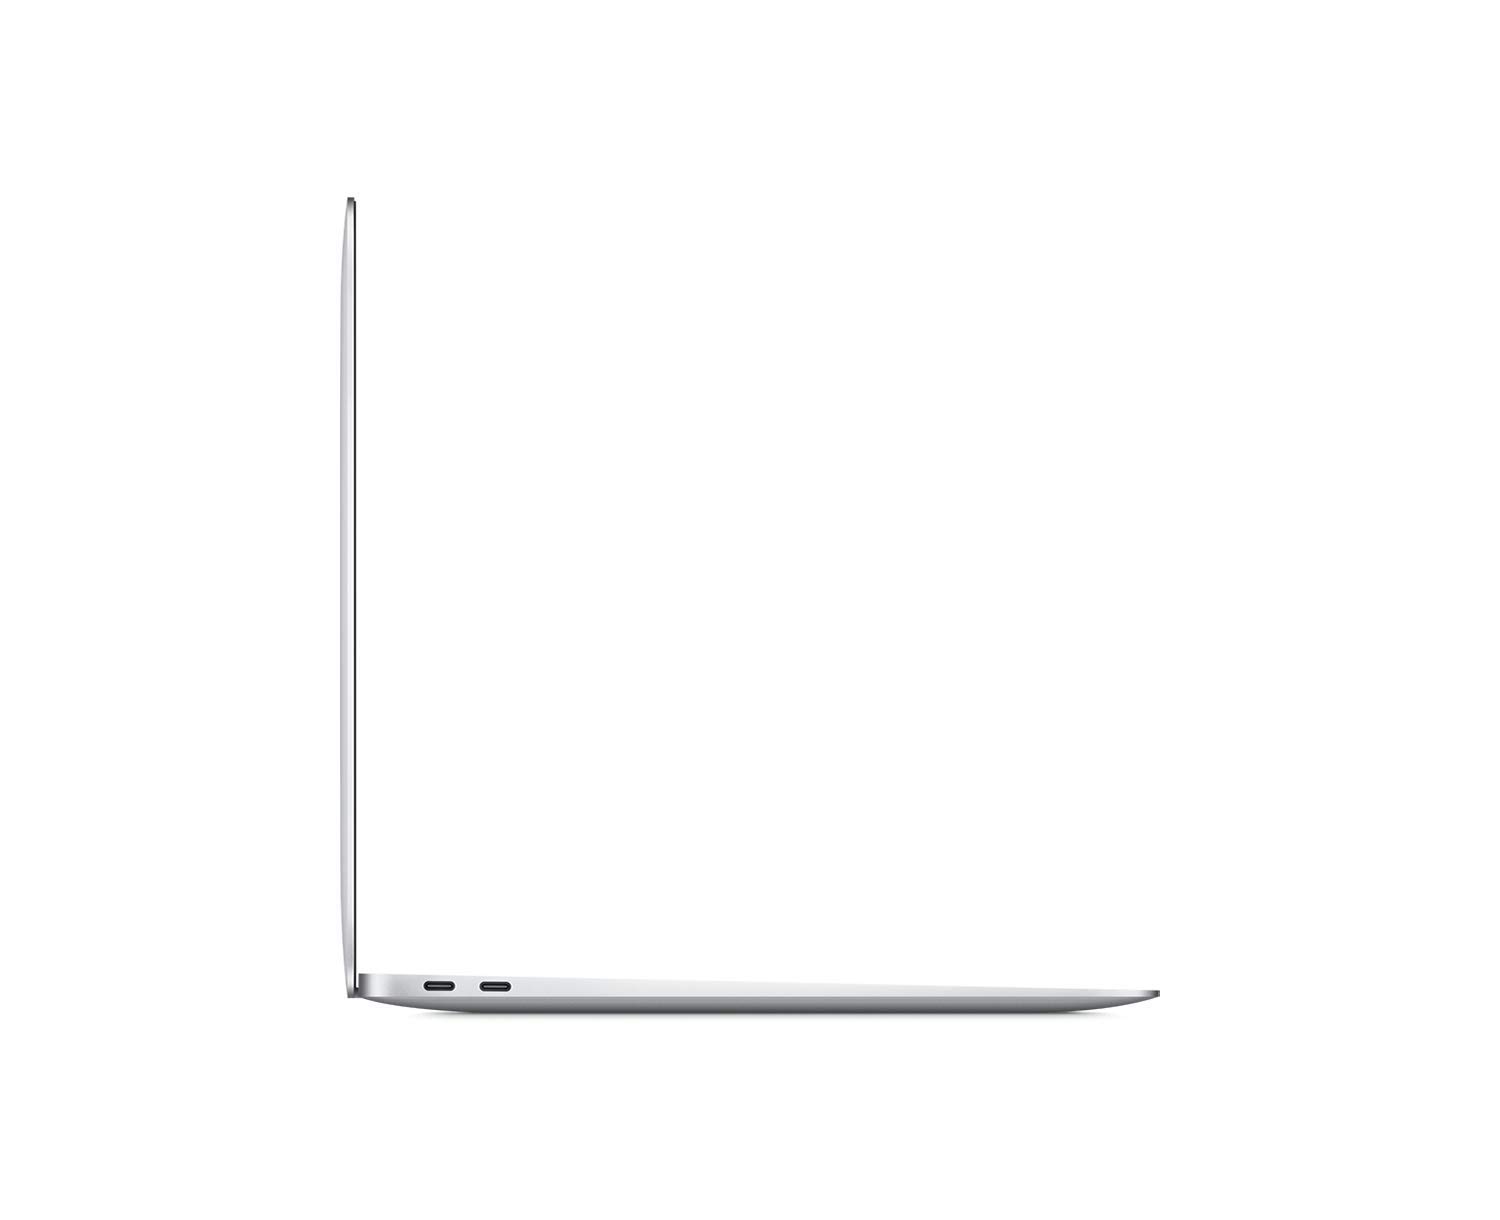 Apple MacBook Air MVFK2LLA, 13 Inches 1.6GHz dual-core Intel Core i5, 8GB RAM, 128GB - Silver (Renewed)